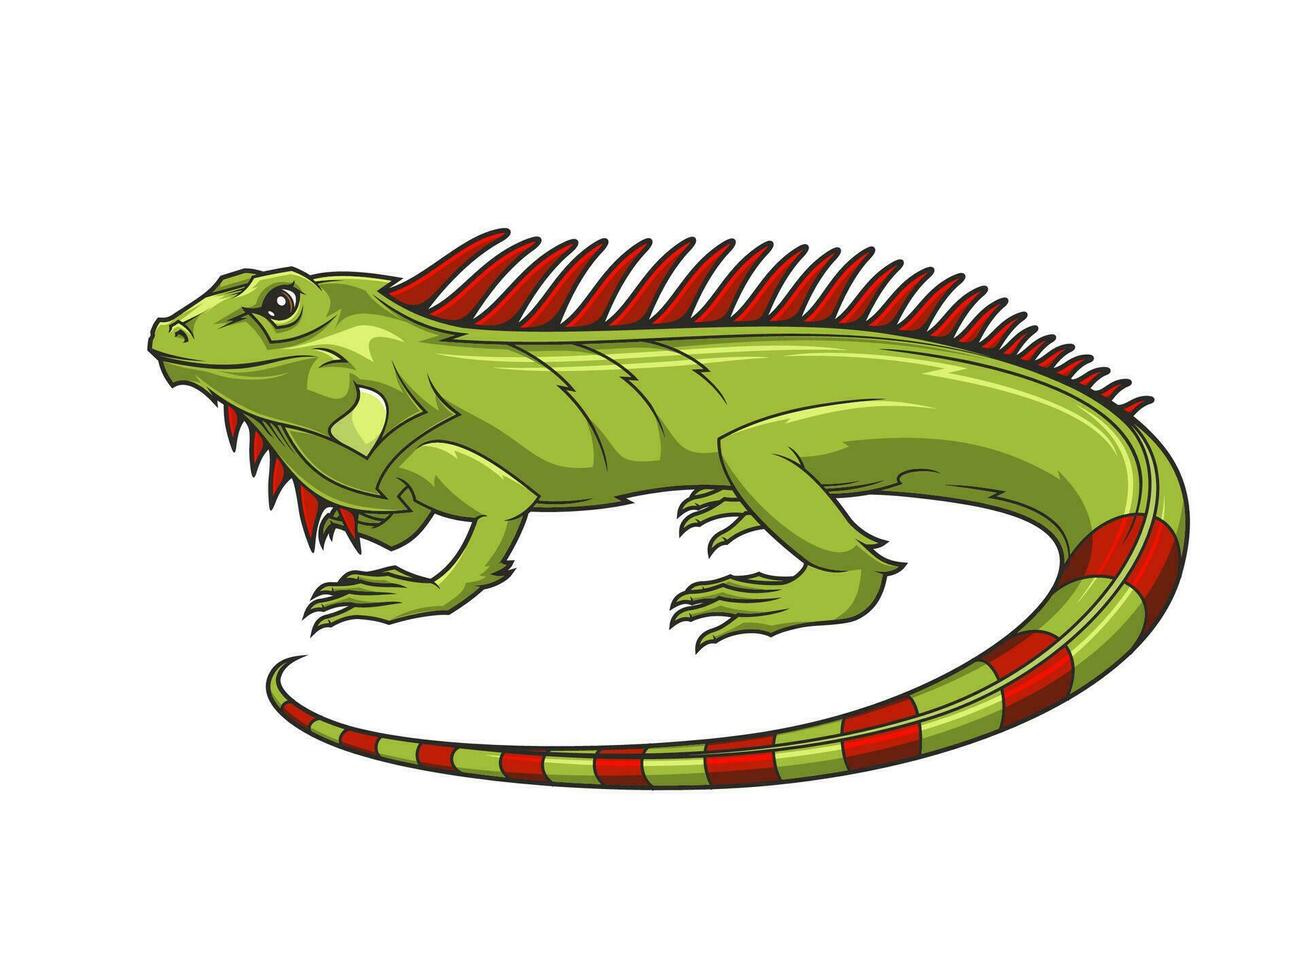 dibujos animados iguana mascota, lagartija animal verde reptil vector